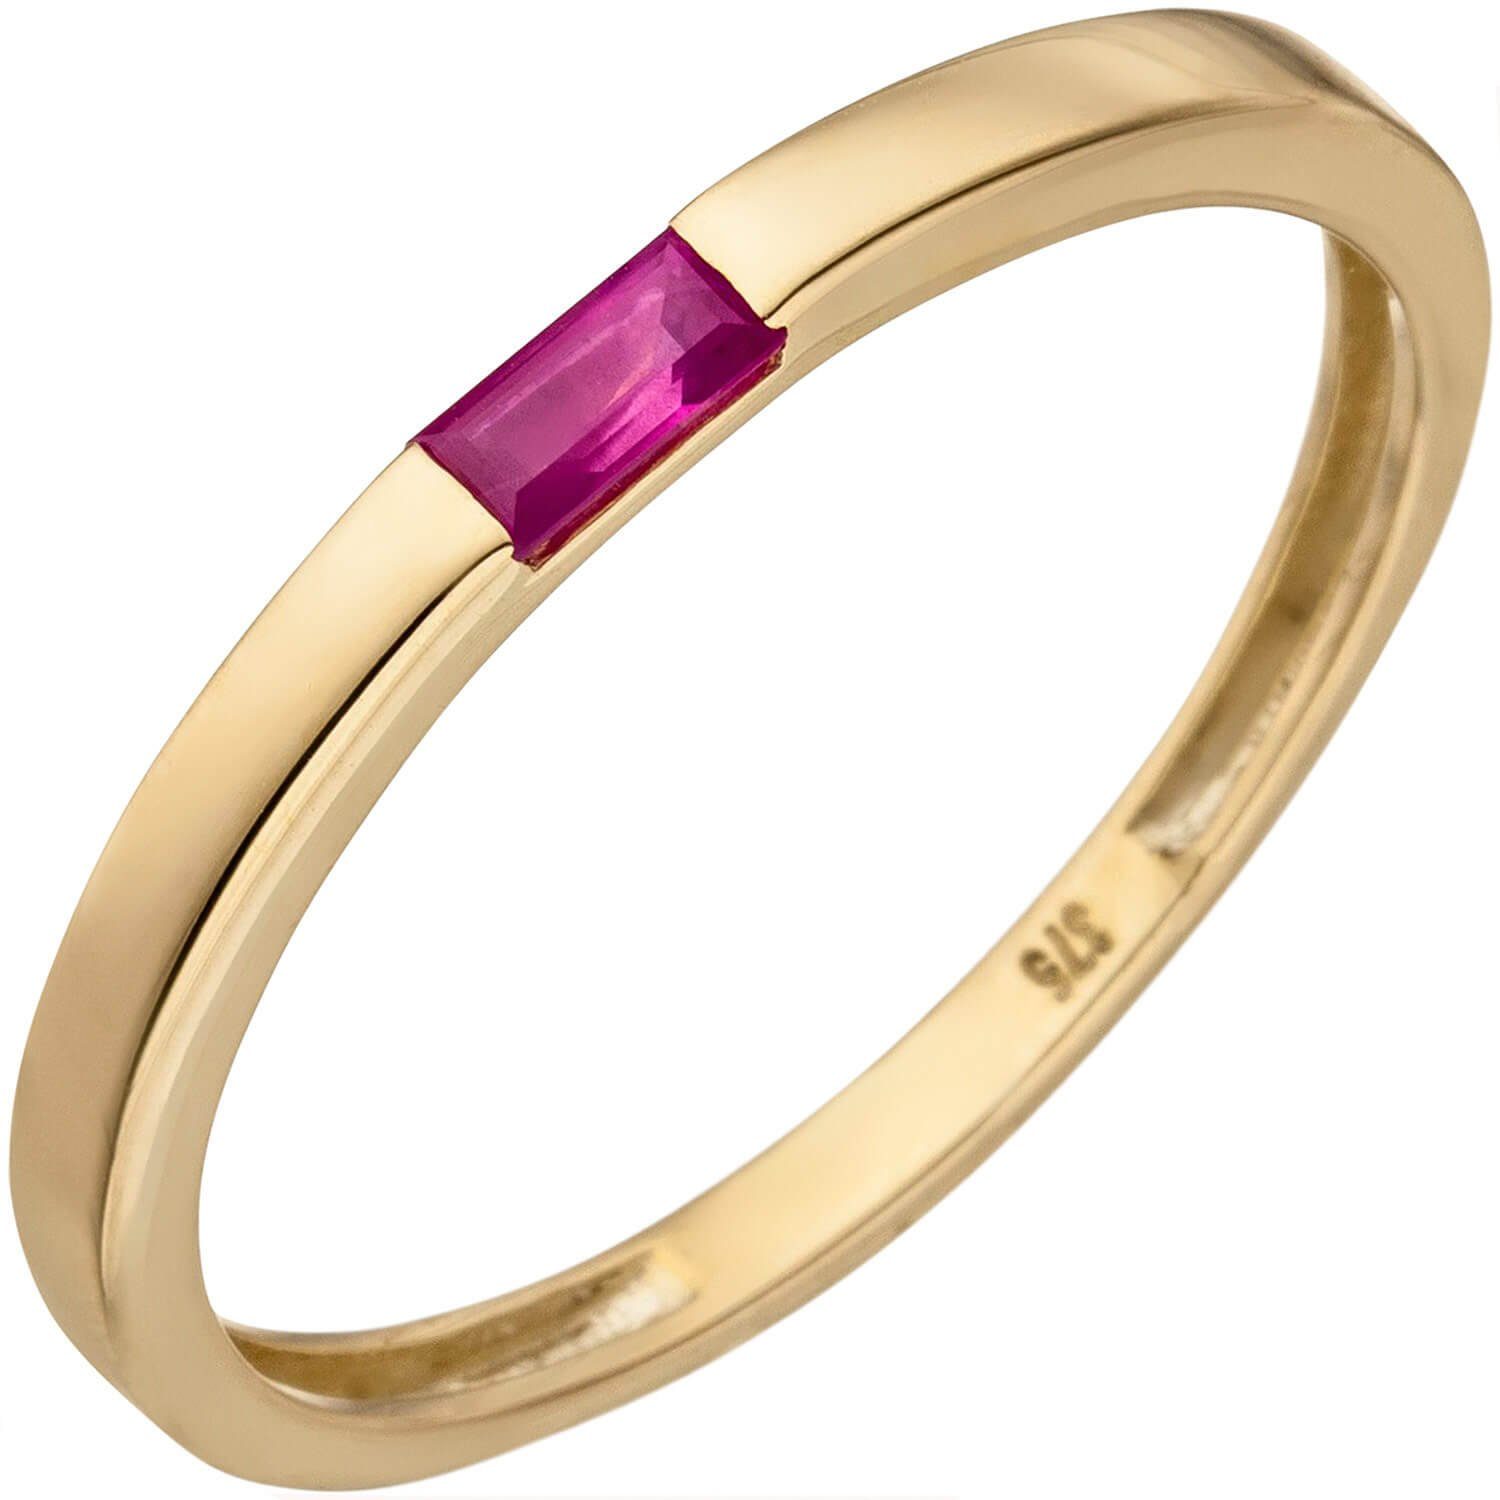 Schmuck Krone Fingerring Ring Damenring mit rotem Rubin 375 Gold Gelbgold Goldring Fingerschmuck, Gold 375